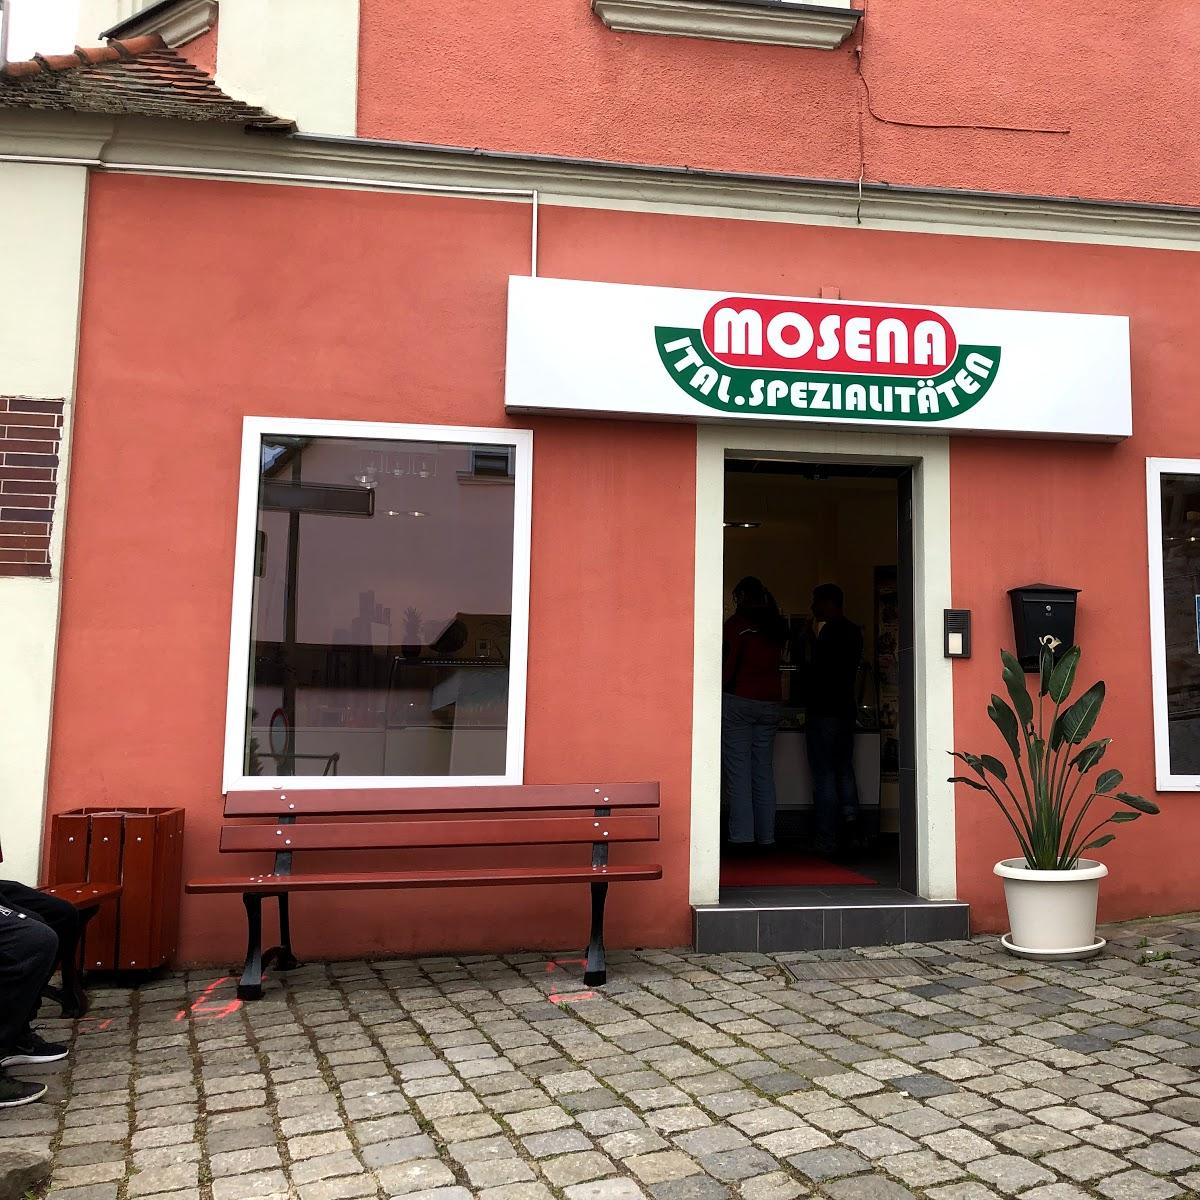 Restaurant "Eisdiele Mosena" in  Roßtal